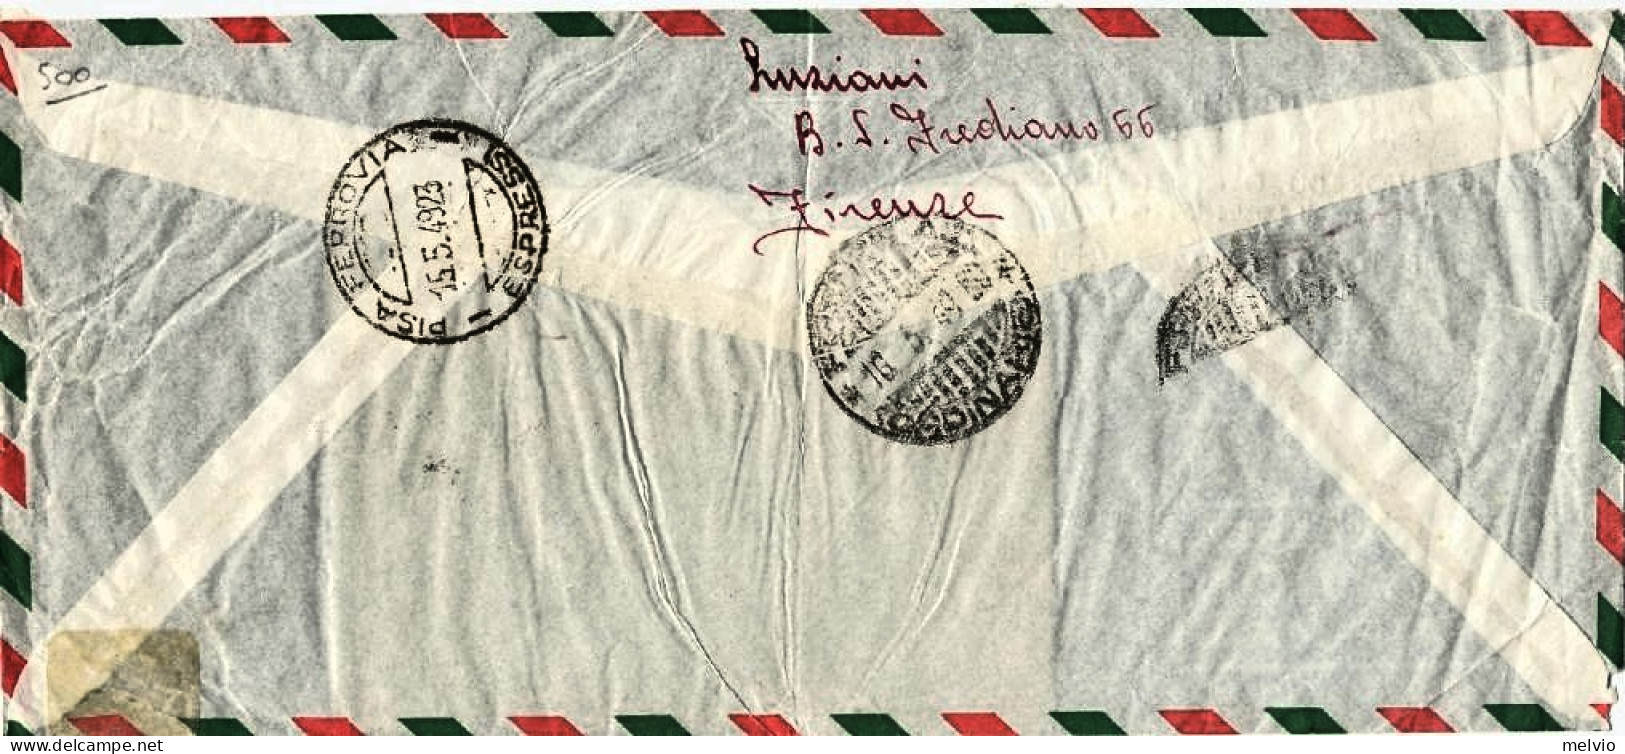 1949-bollo Lineare Primo Esperimento Postale Volovelistico Firenze-Pisa Su Aerog - Poste Aérienne